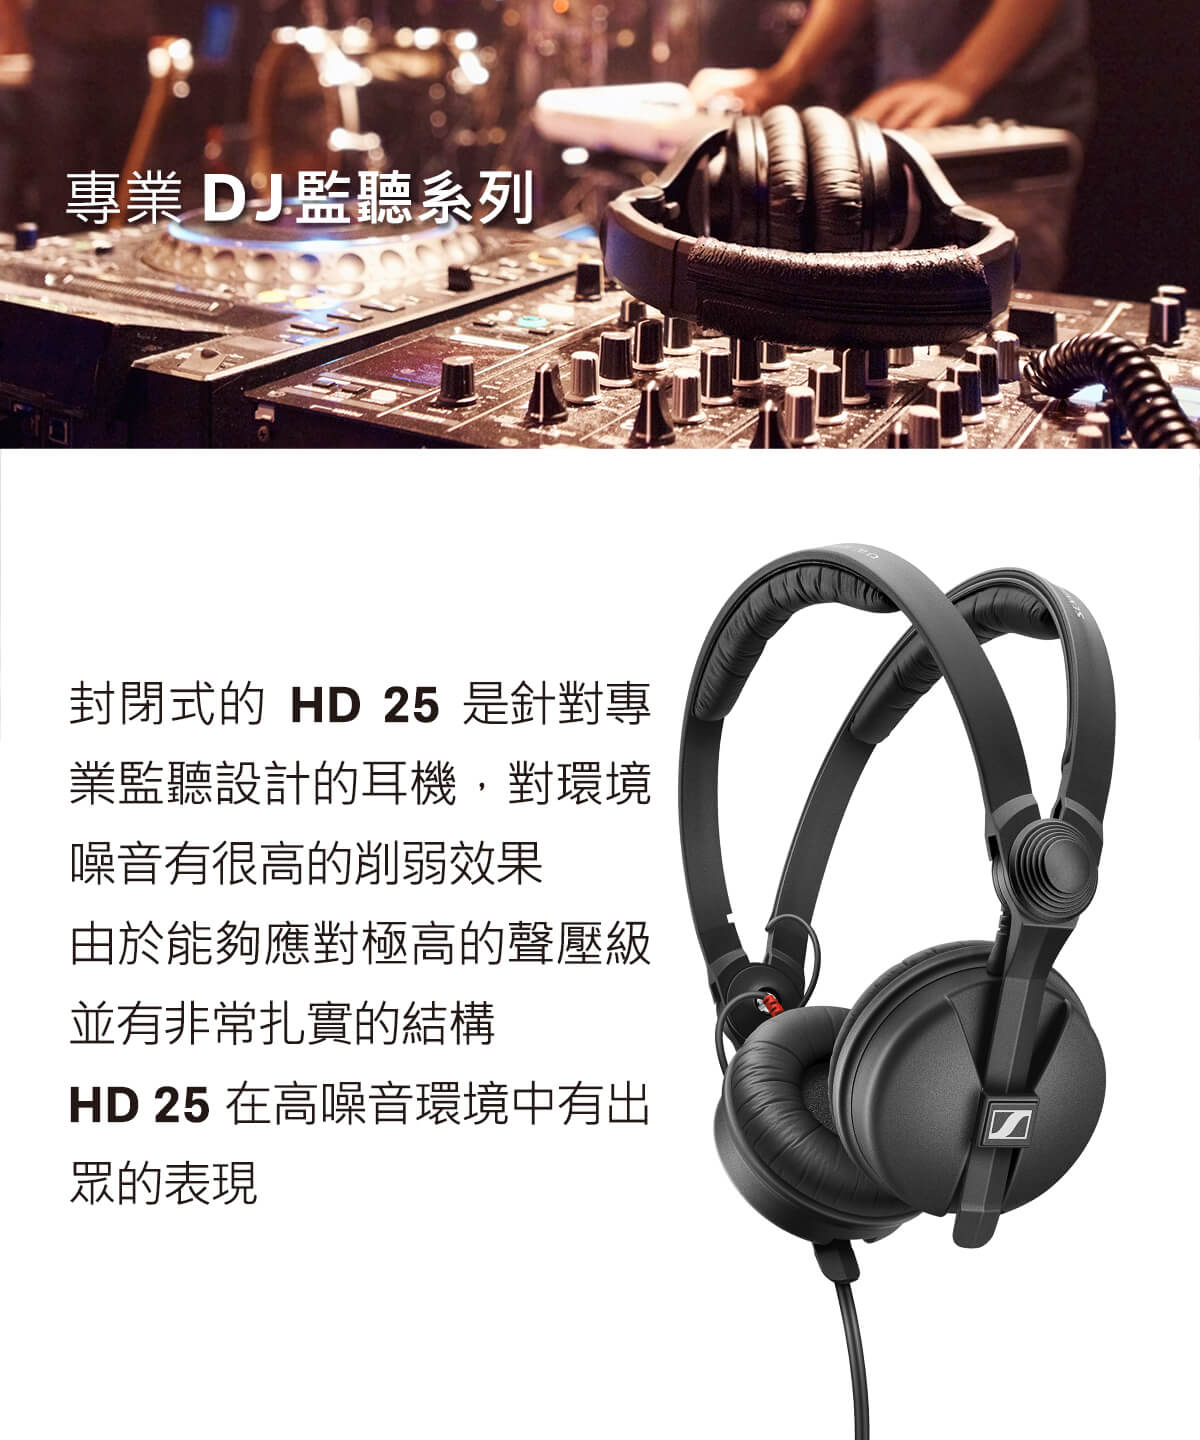 Sennheiser HD-25 Plus 經典款監聽耳機配件升級版